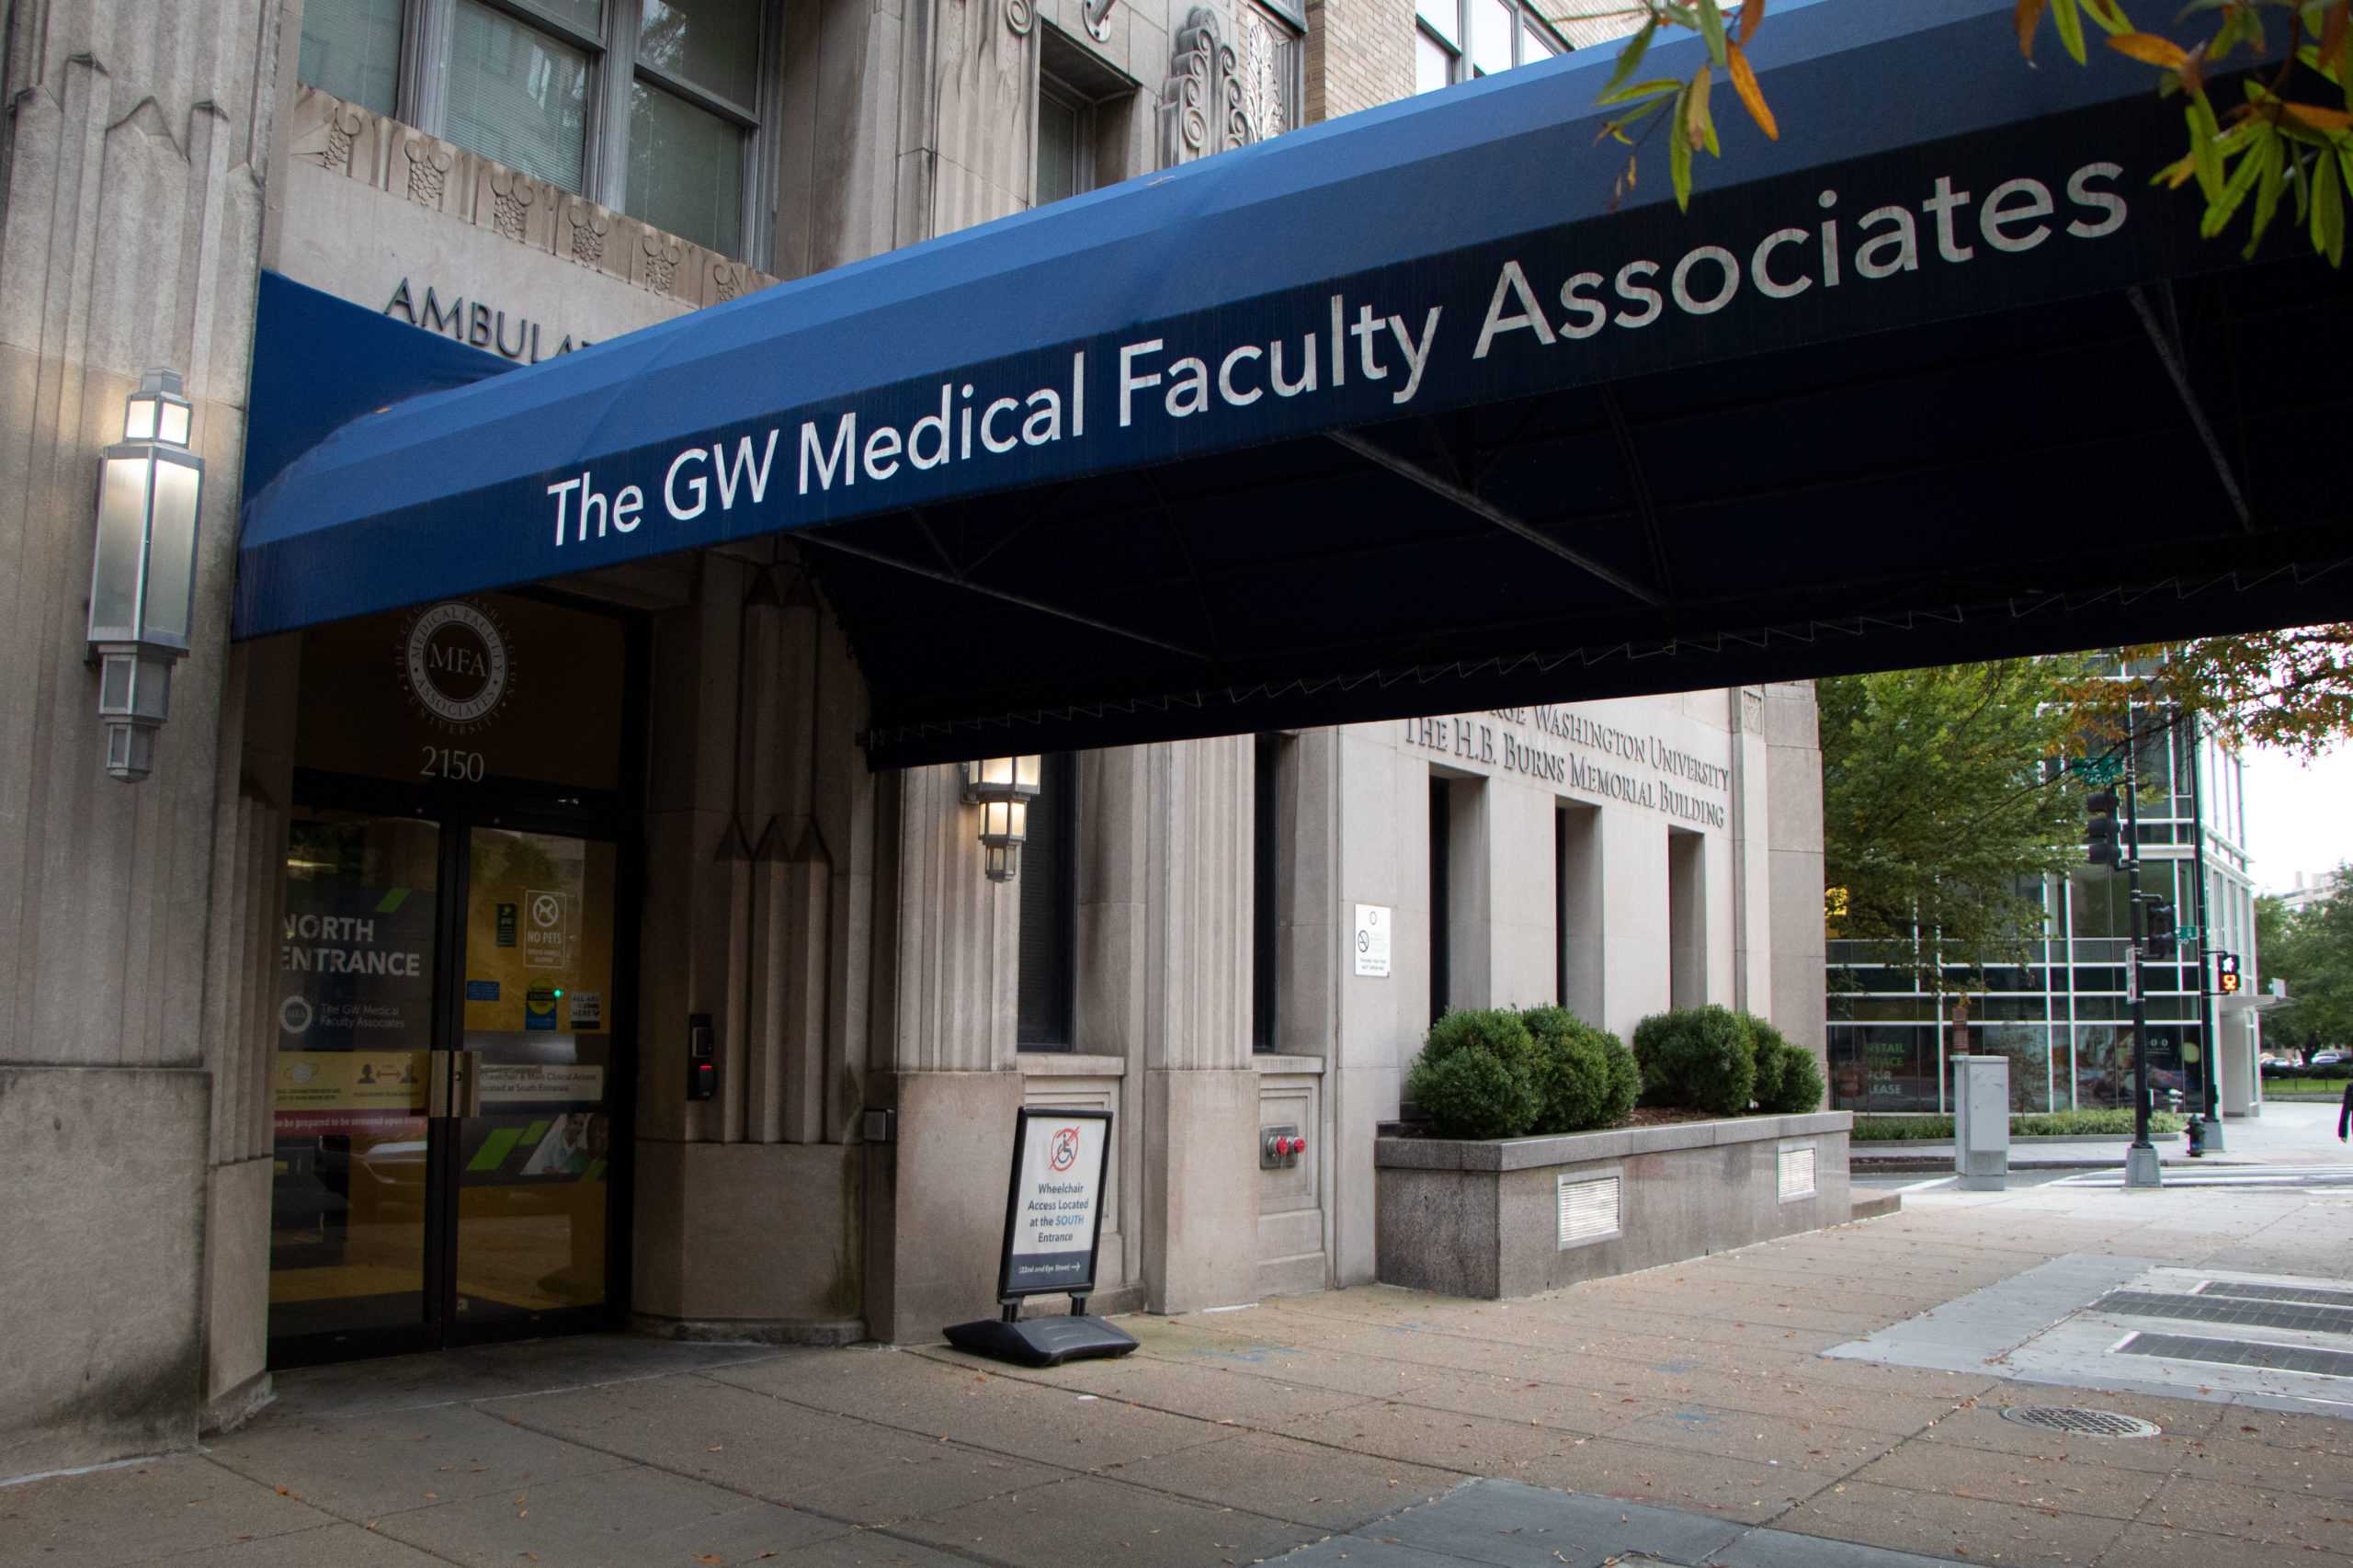 The Medical Faculty Associates building on Pennsylvania Avenue